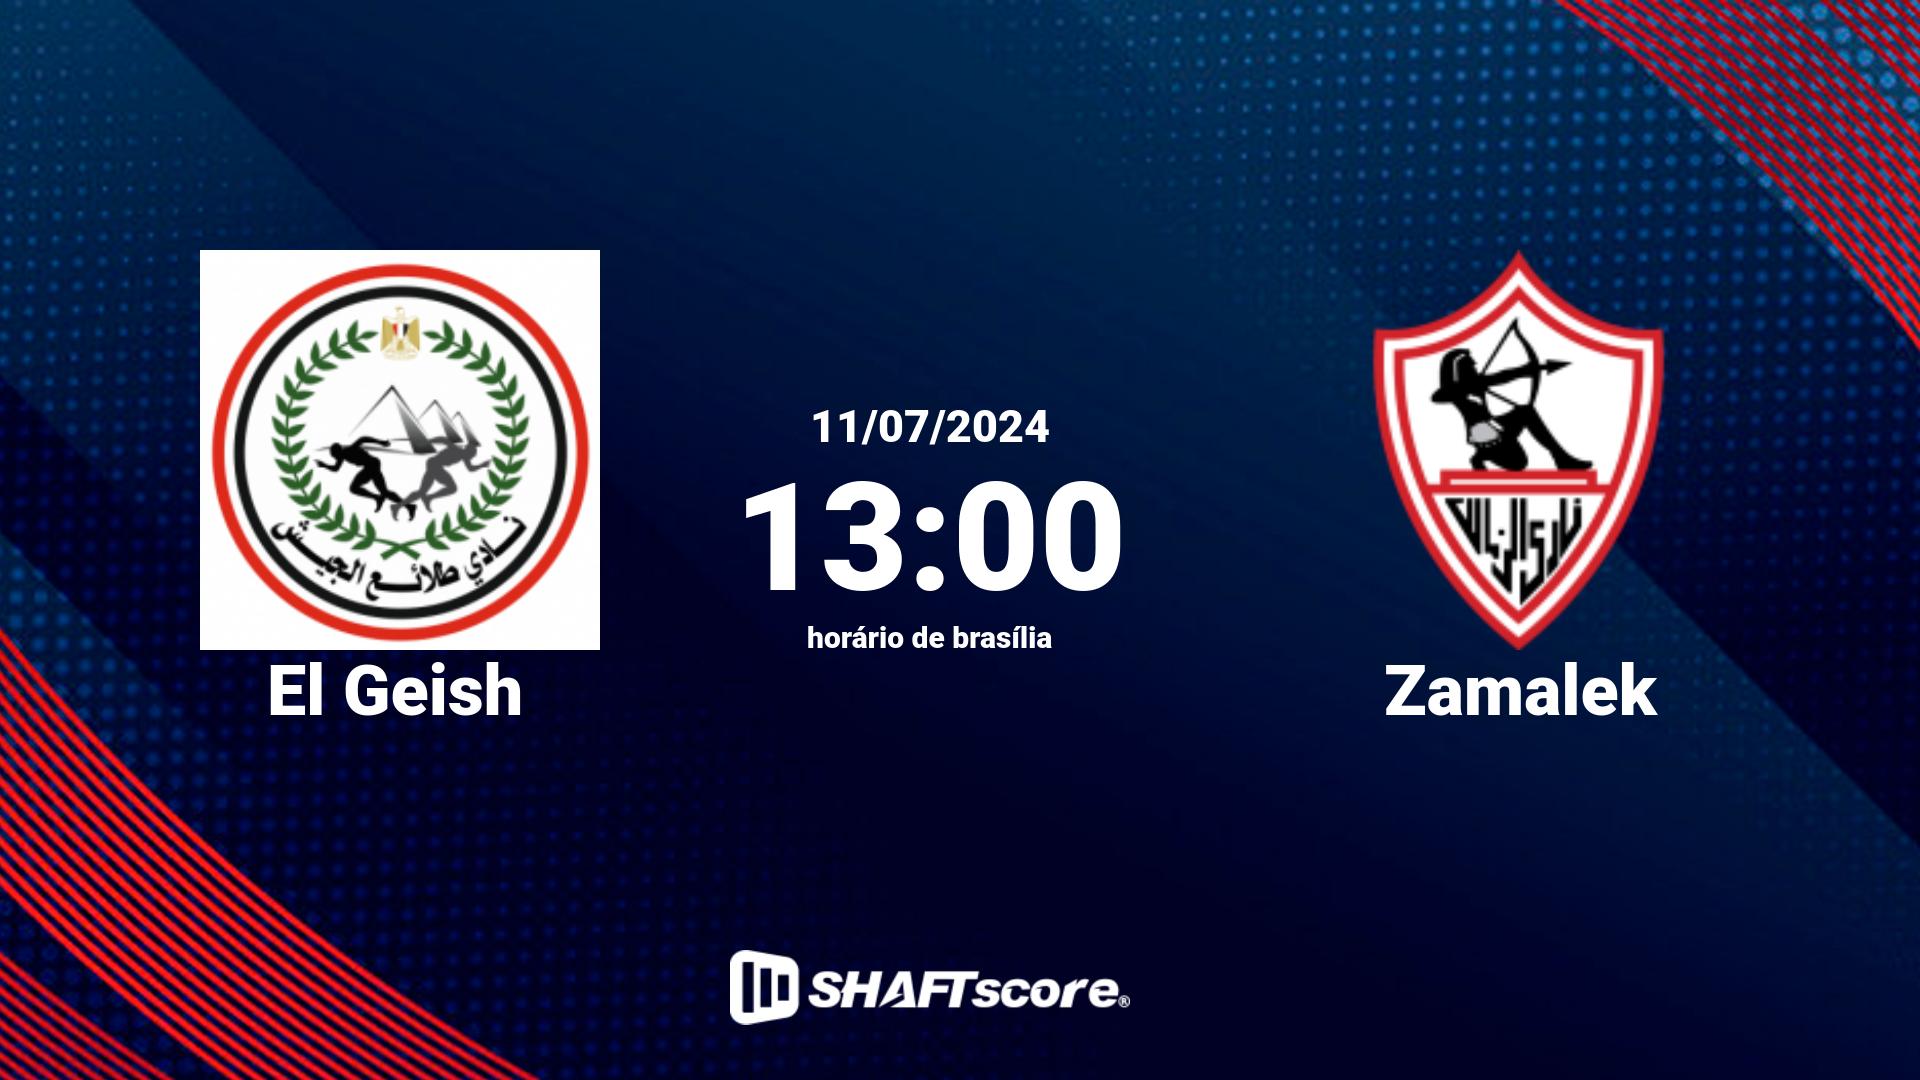 Estatísticas do jogo El Geish vs Zamalek 11.07 13:00